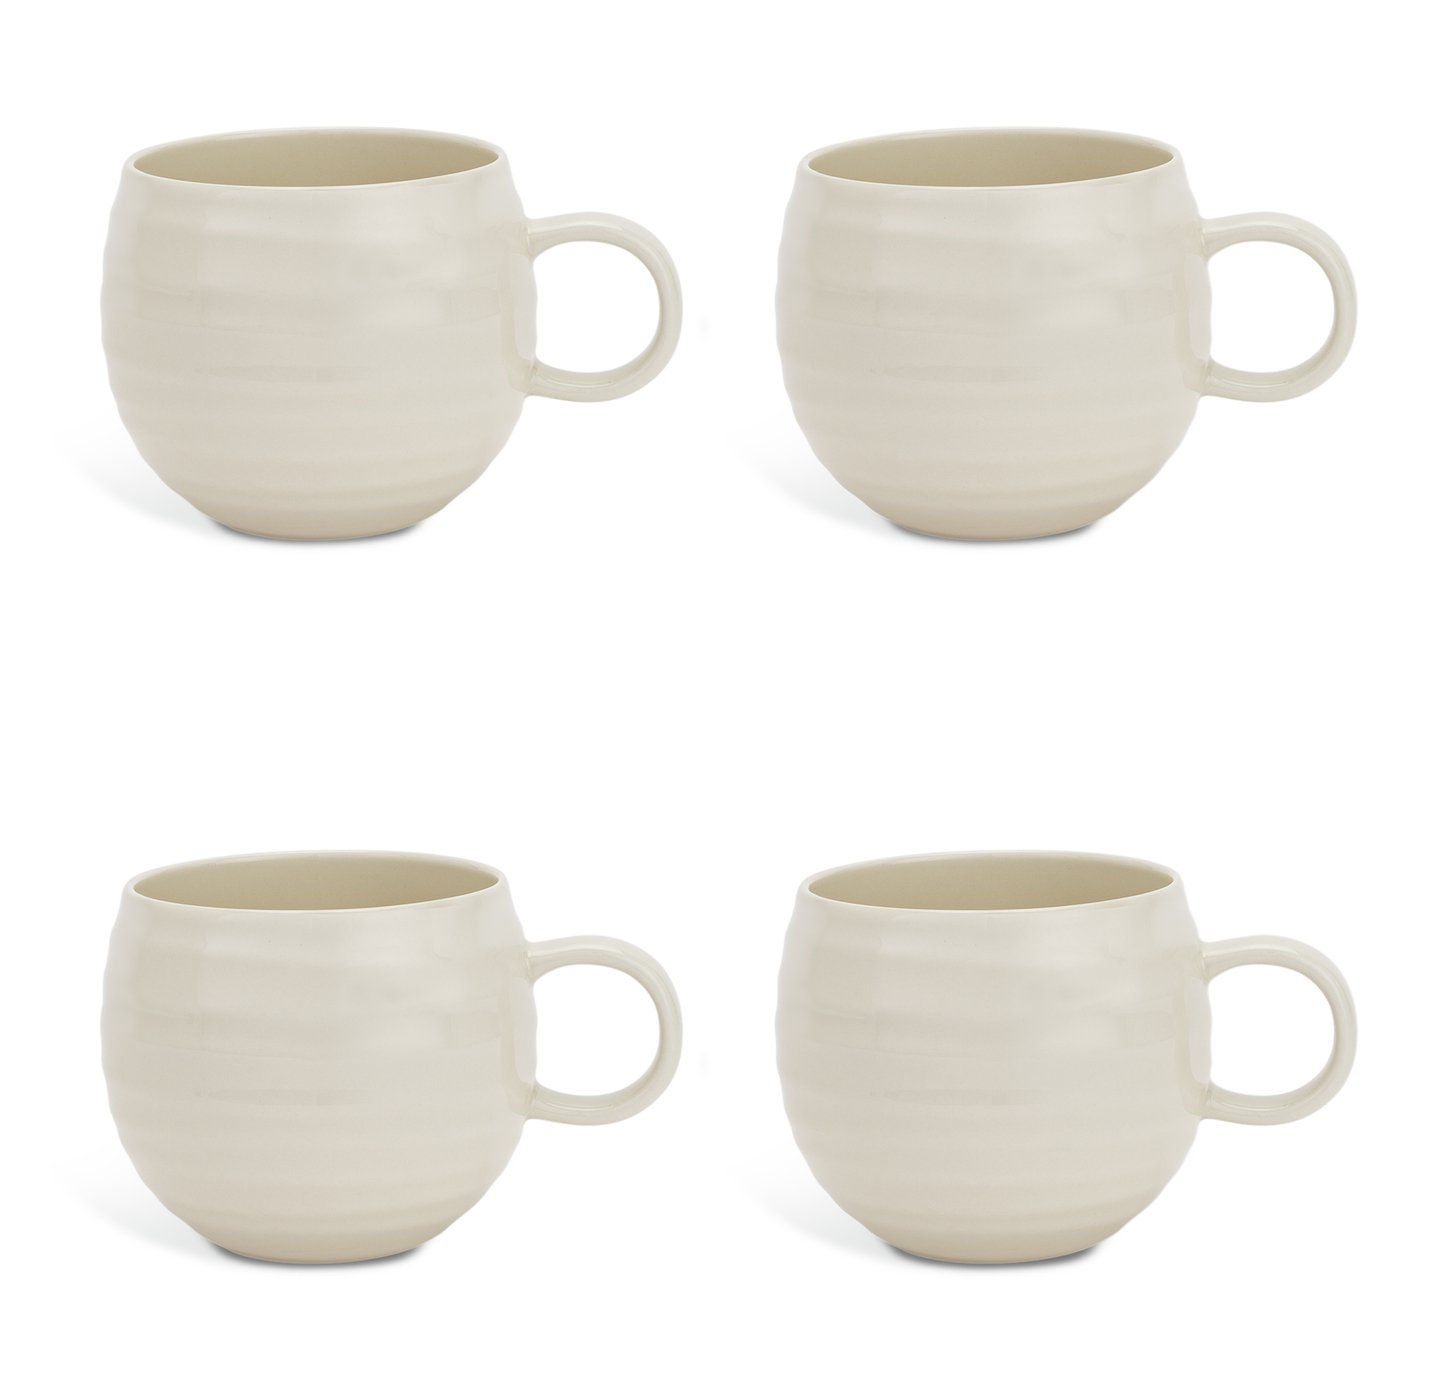 Habitat Ripple Set of 4 Stoneware Mugs - Cream